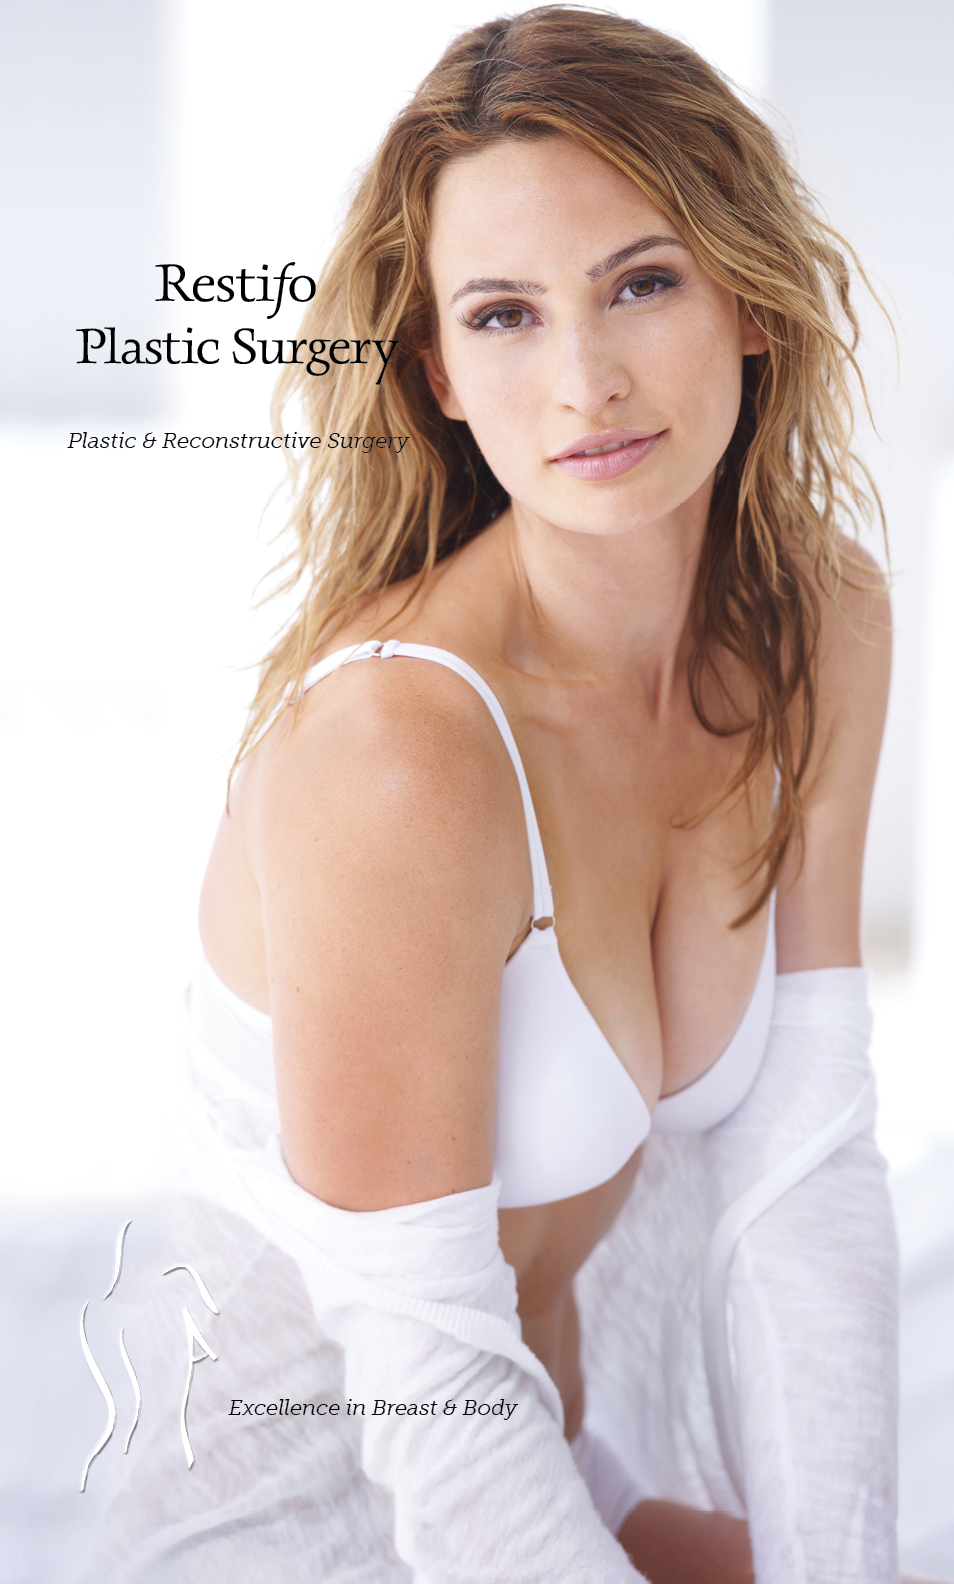 Restifo Plastic Surgery Brochure Graphic Design 03